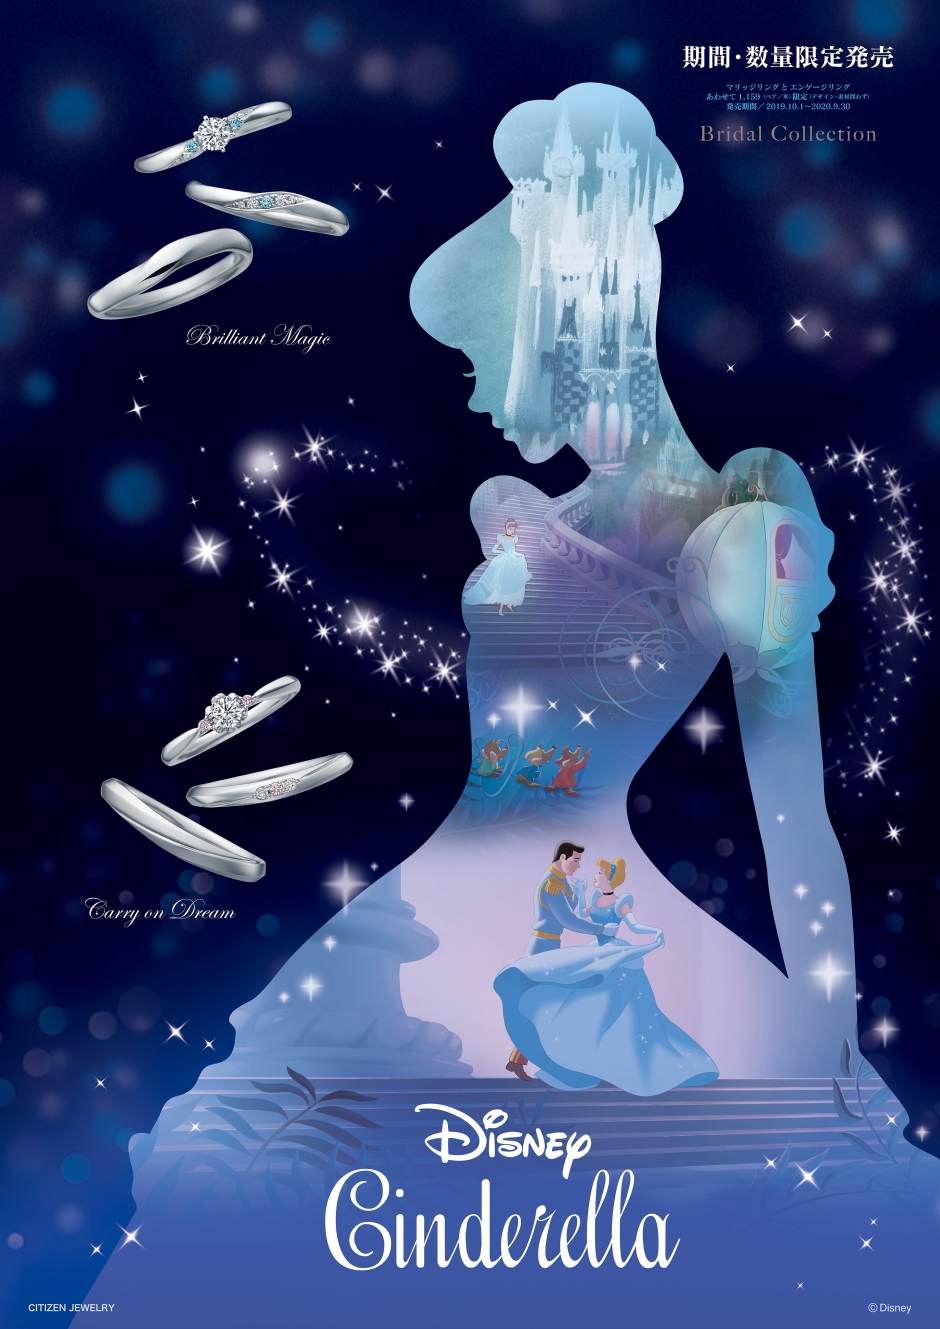 Disney Cinderella ディズニーシンデレラ リングデザインリニューアル Mayfair